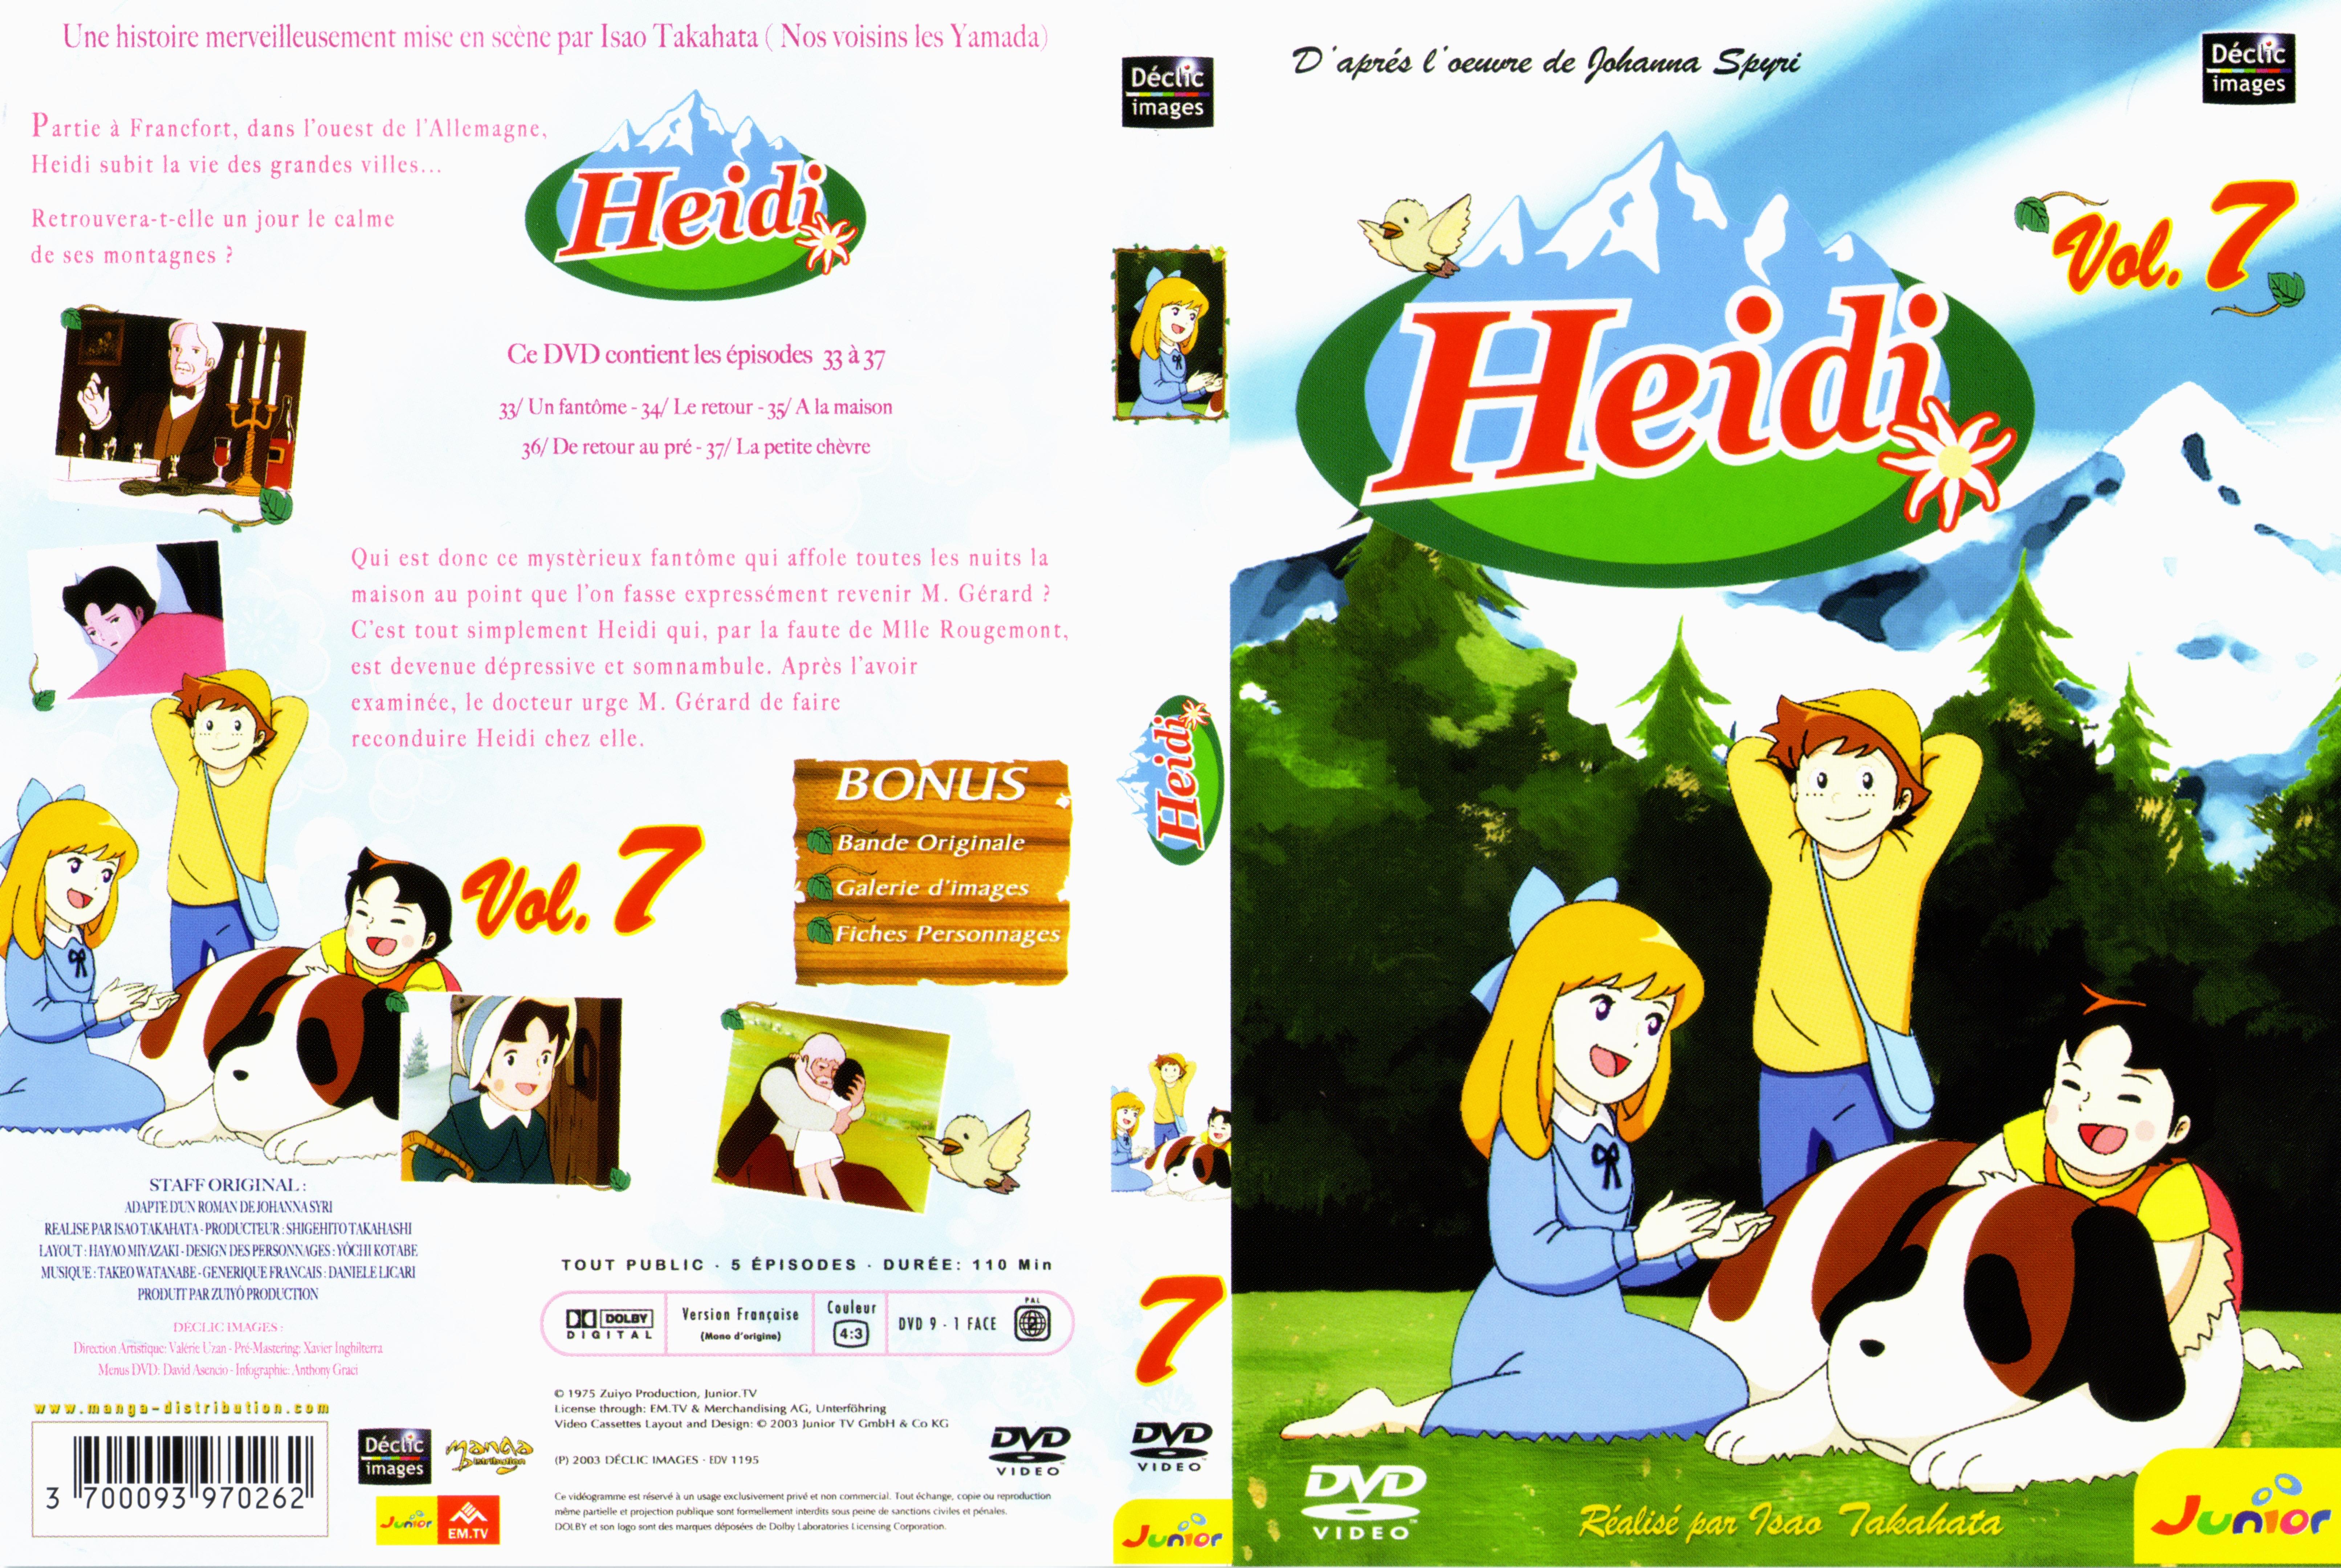 Jaquette DVD Heidi DVD 07